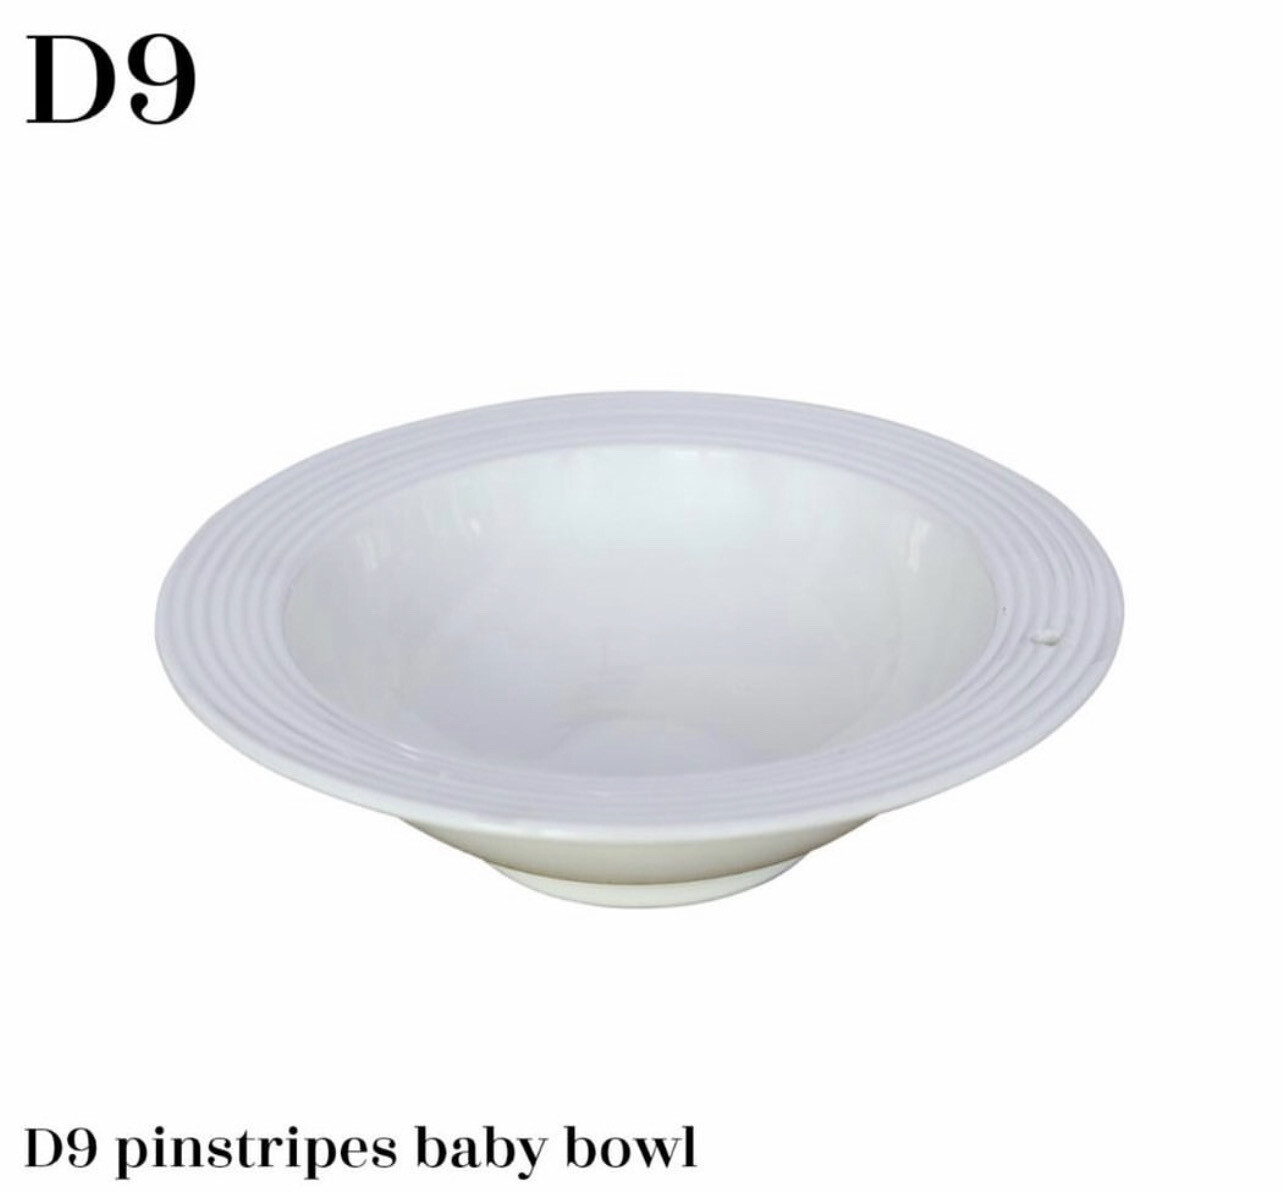 D9 Pinstripe Baby Bowl 9.5” diameter X 2.75” deep